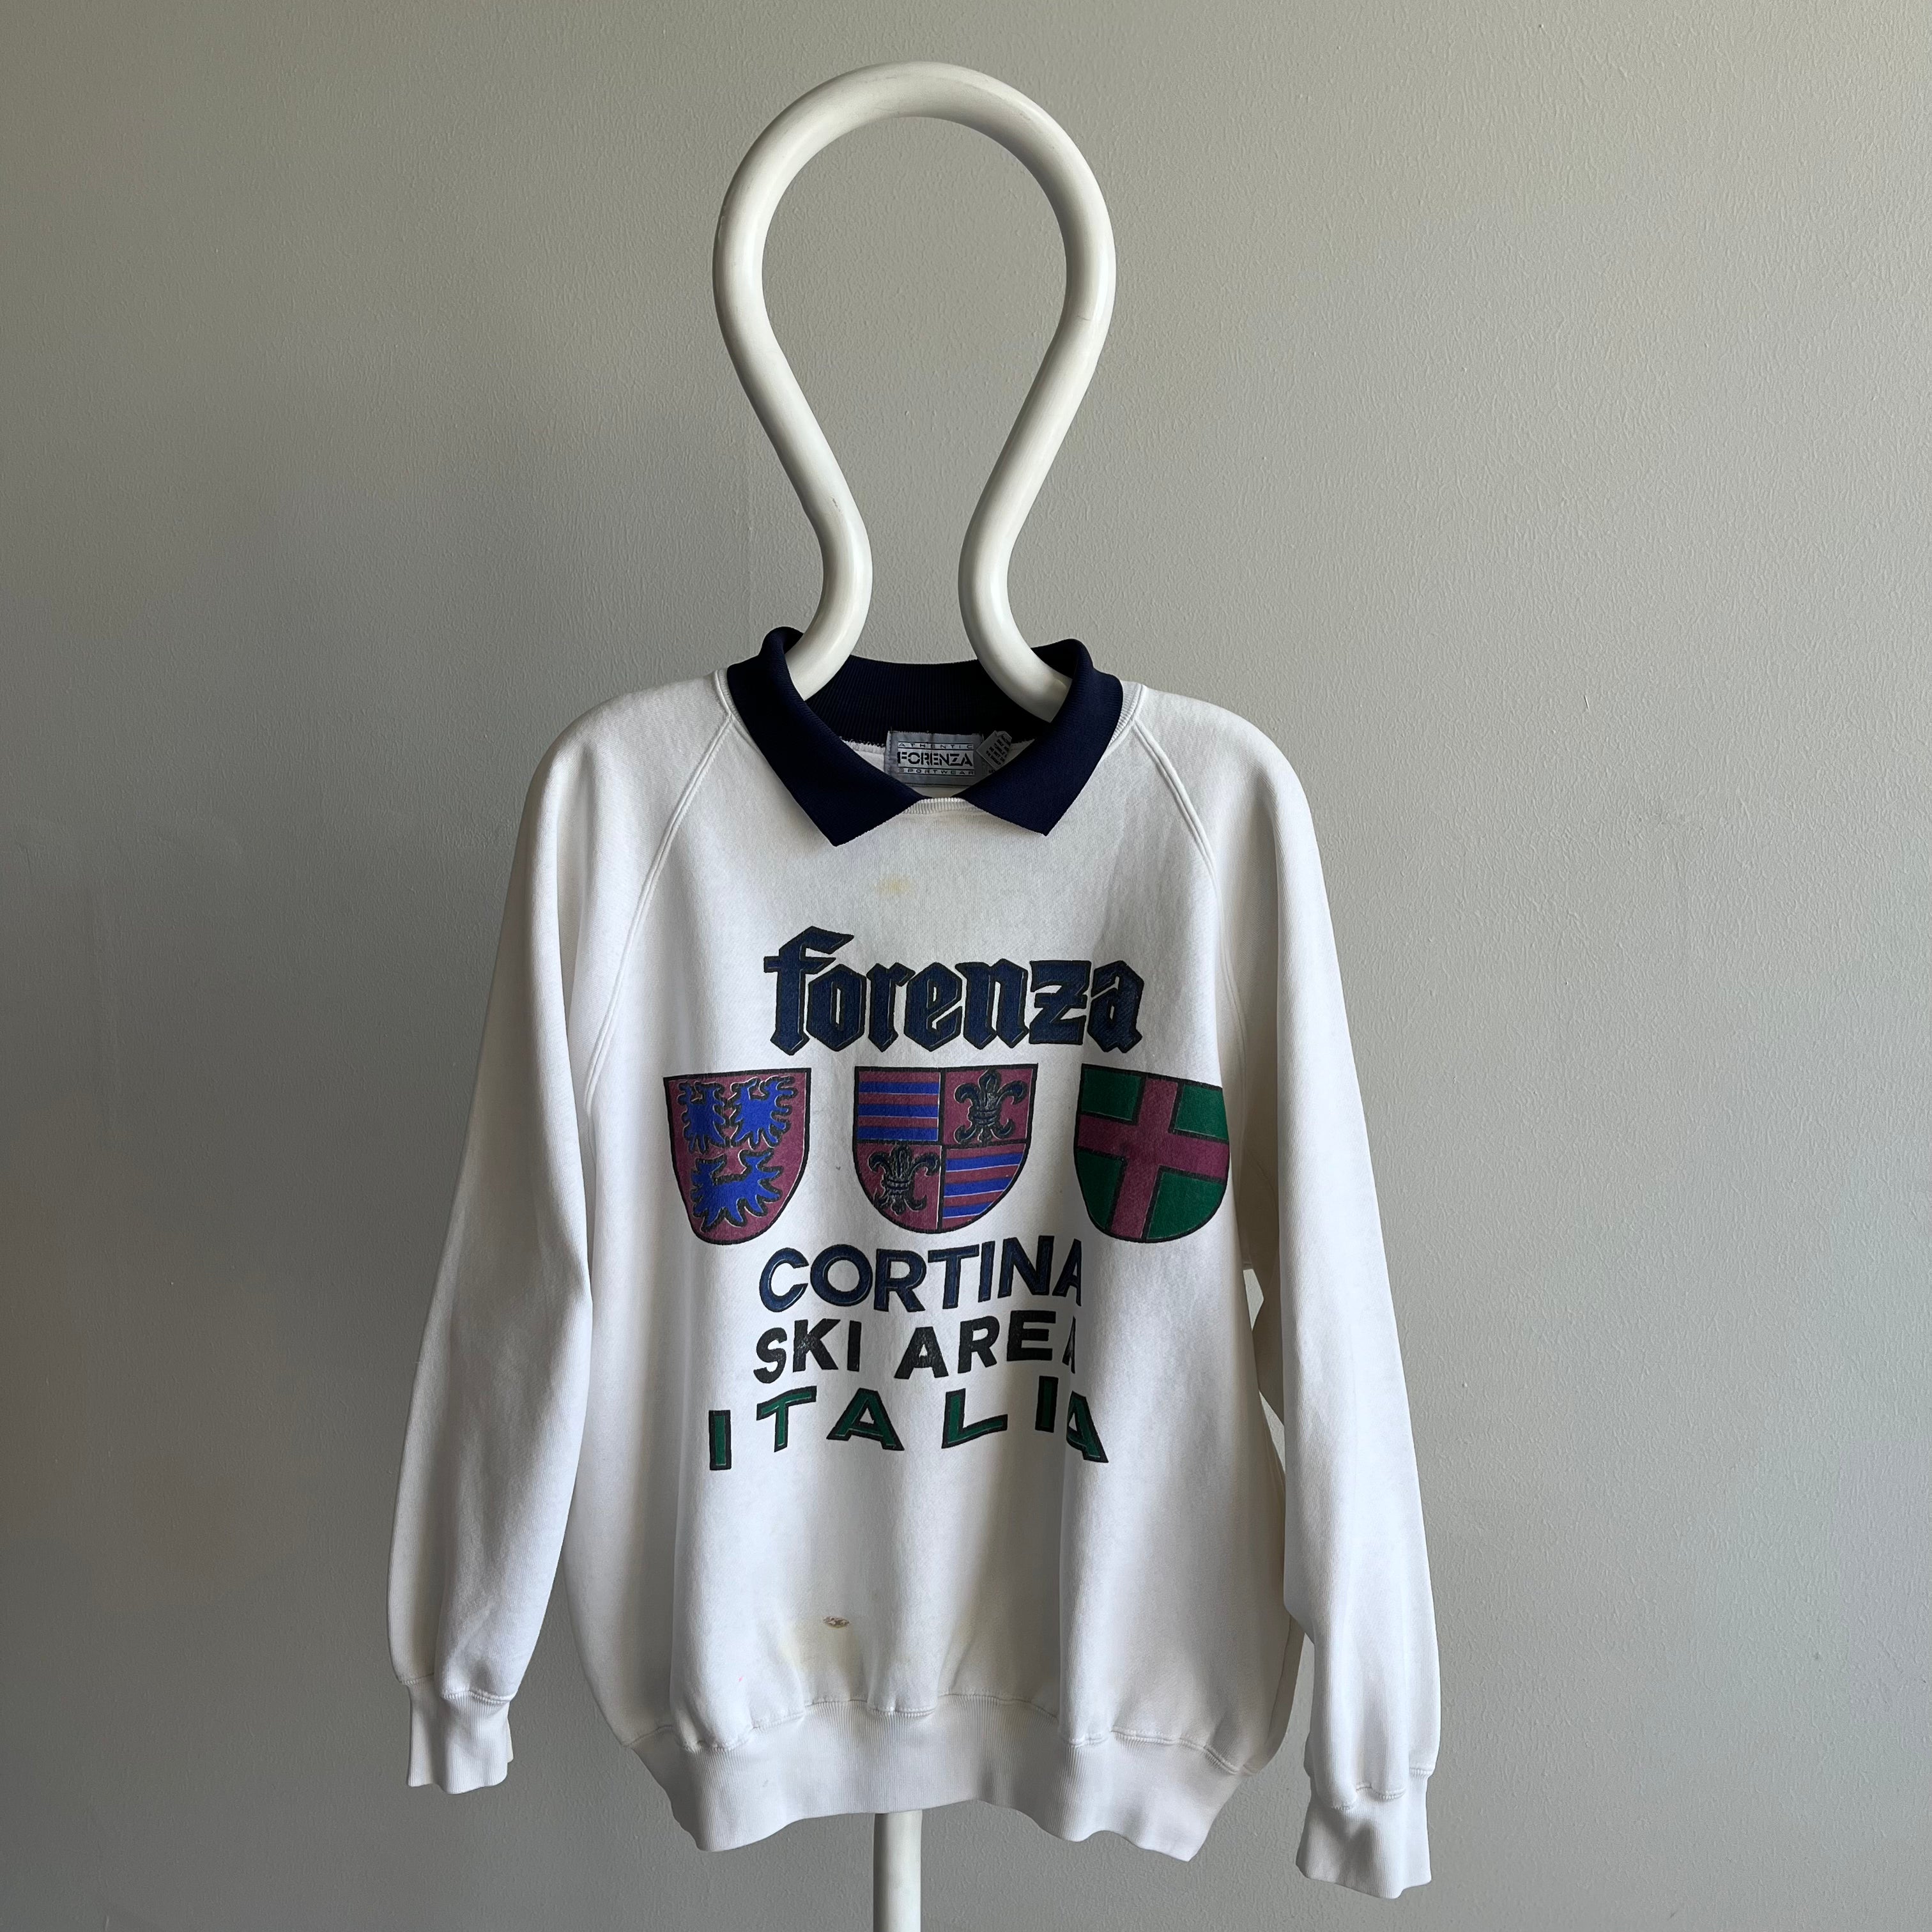 1980s Forenza Cortina Ski Area Italia - Front and Back - Polo Sweatshirt - Stained!